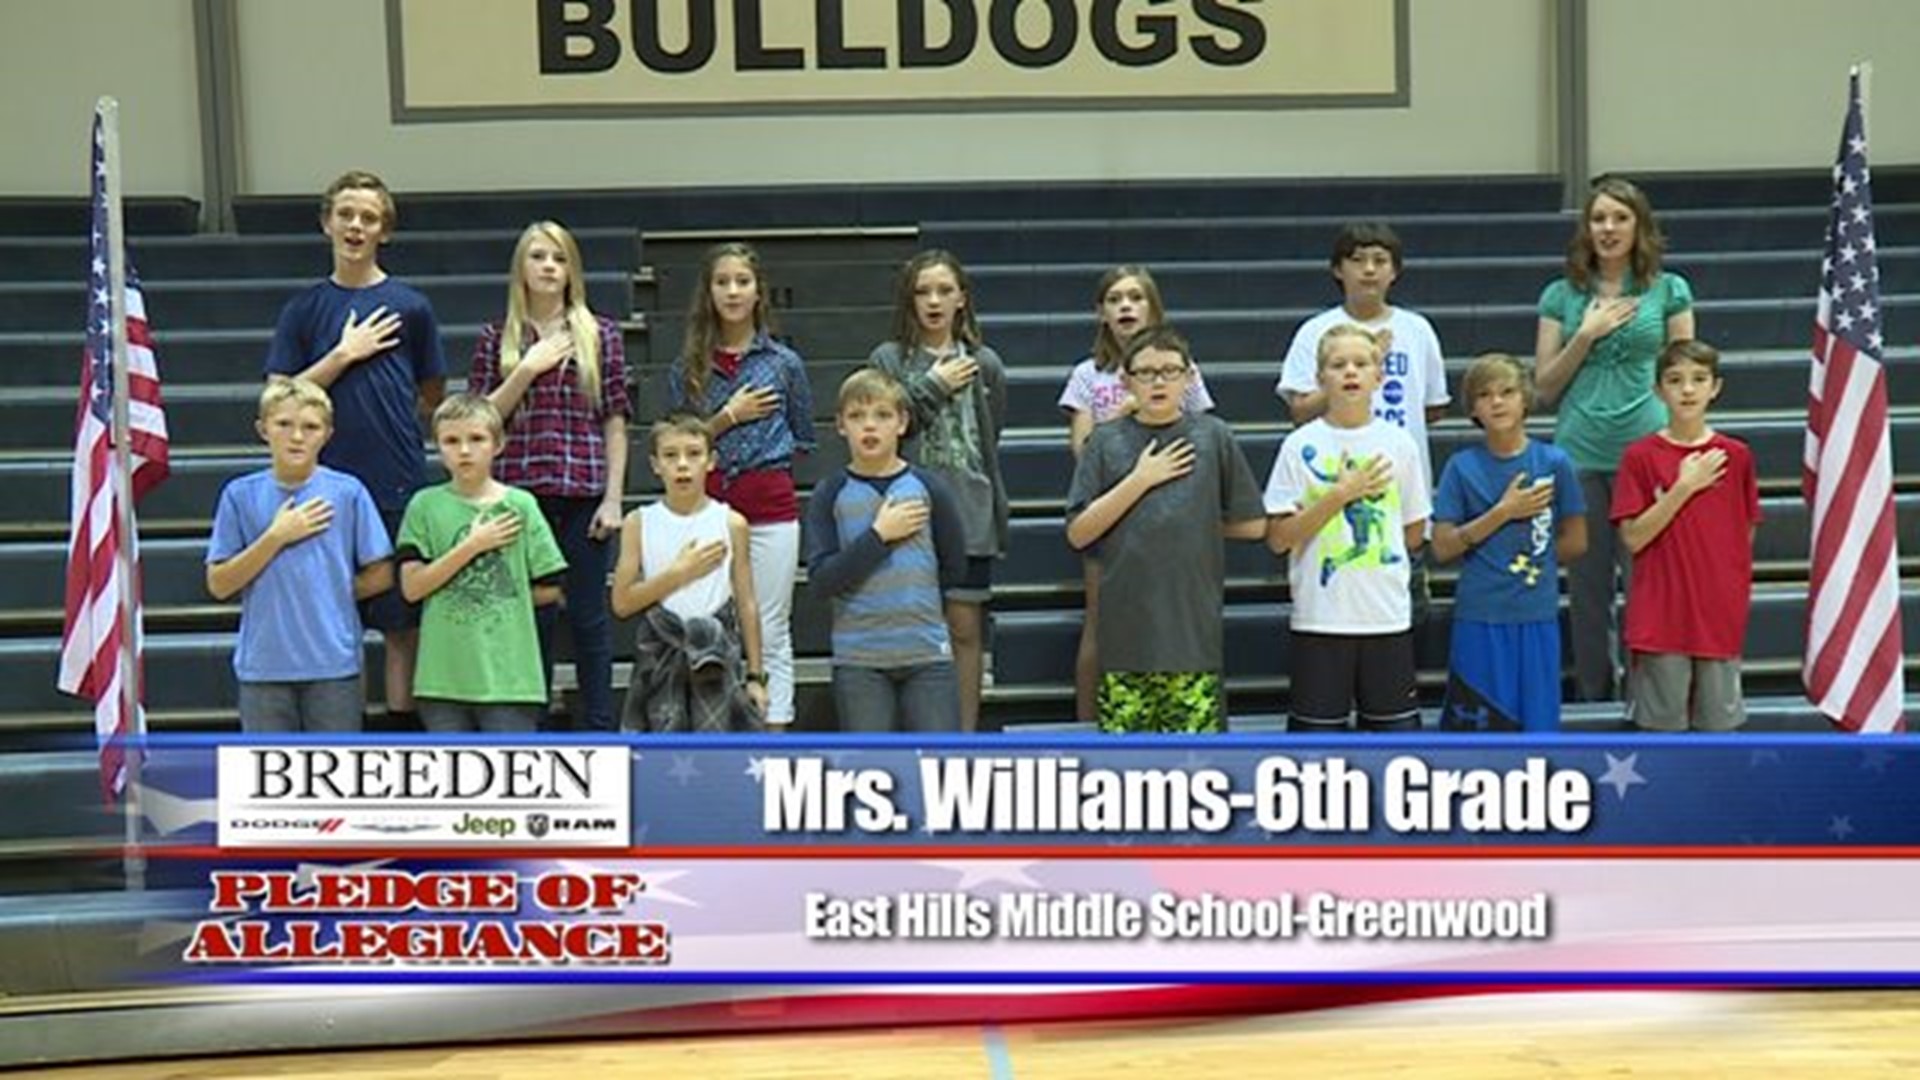 East Hills Middle School, Greenwood - Mrs. Williams - 6th Grade